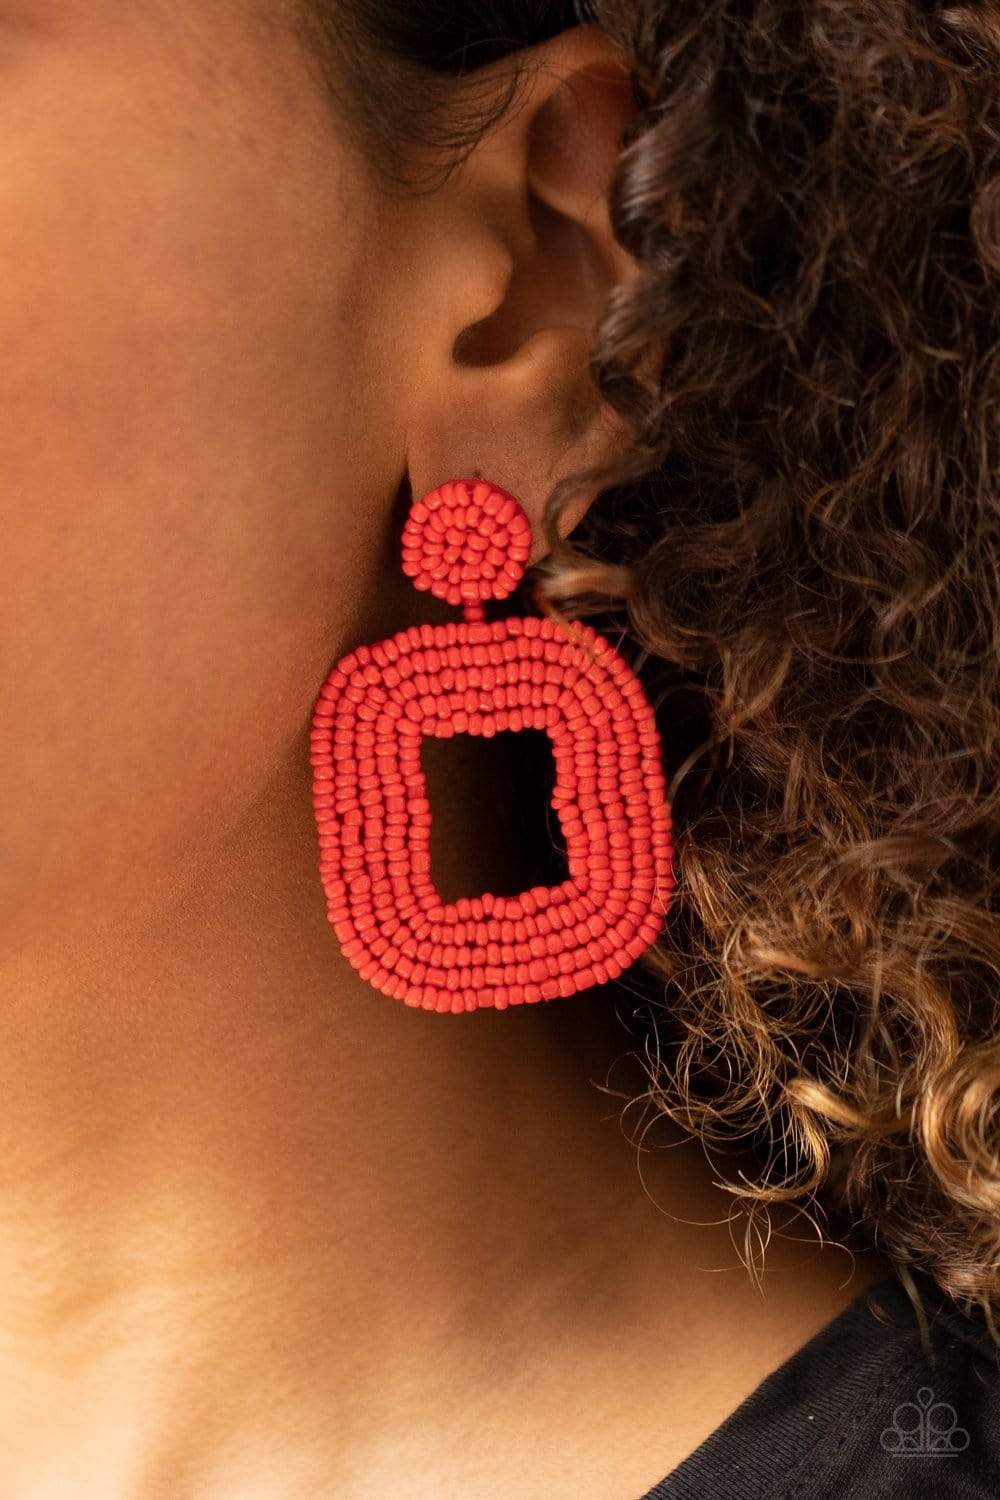 Beaded Bella - Red Jewelry